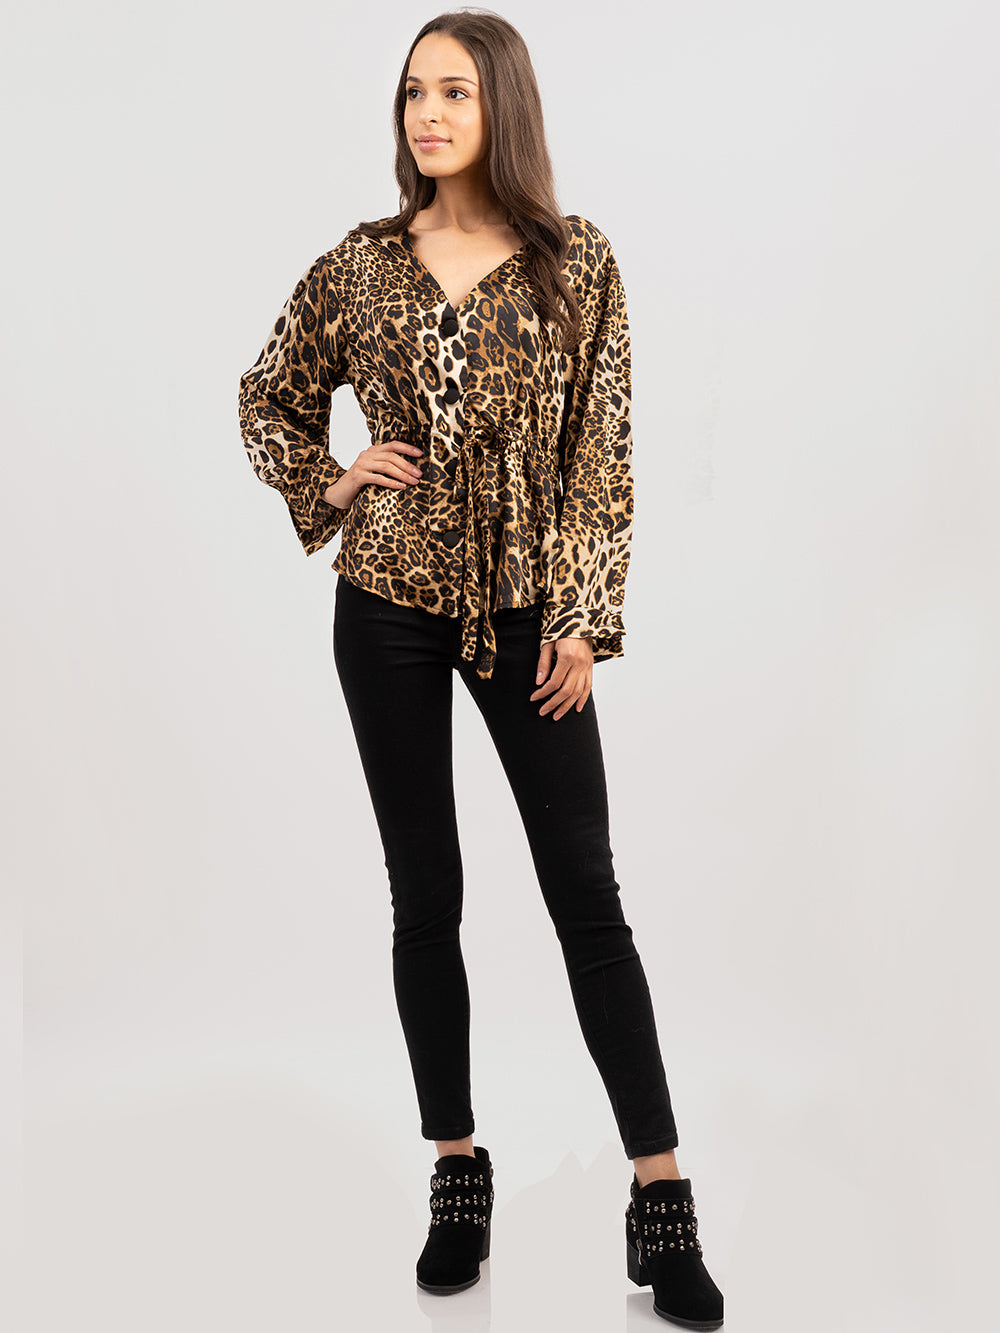 American Bling Women Leopard Print Shirt Sleeve Drawstring Blouse - Montana West World